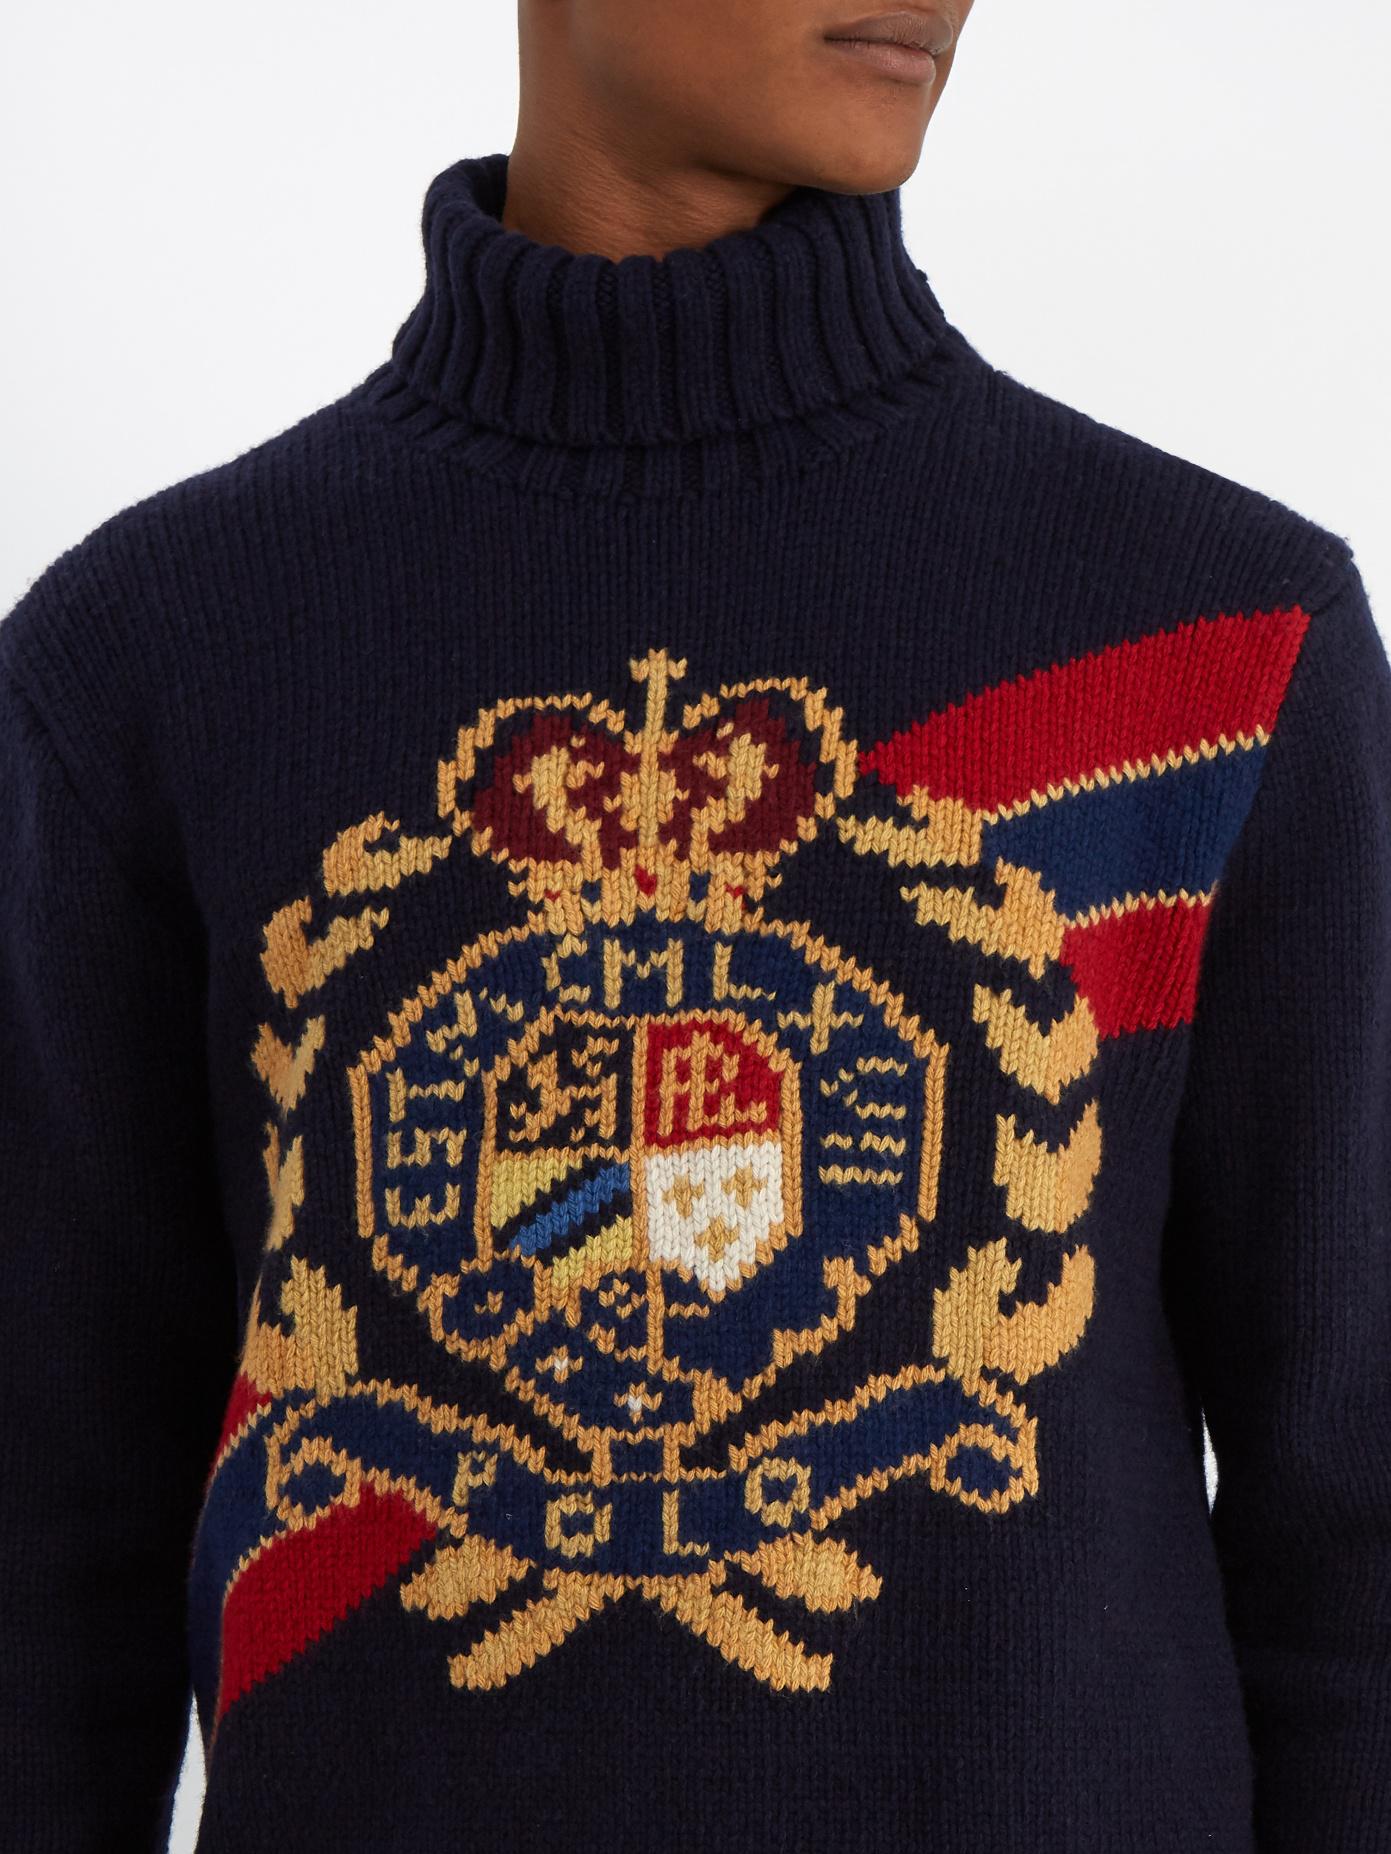 Polo Ralph Lauren Yacht-crest Roll-neck Wool Sweater in Blue for Men - Lyst